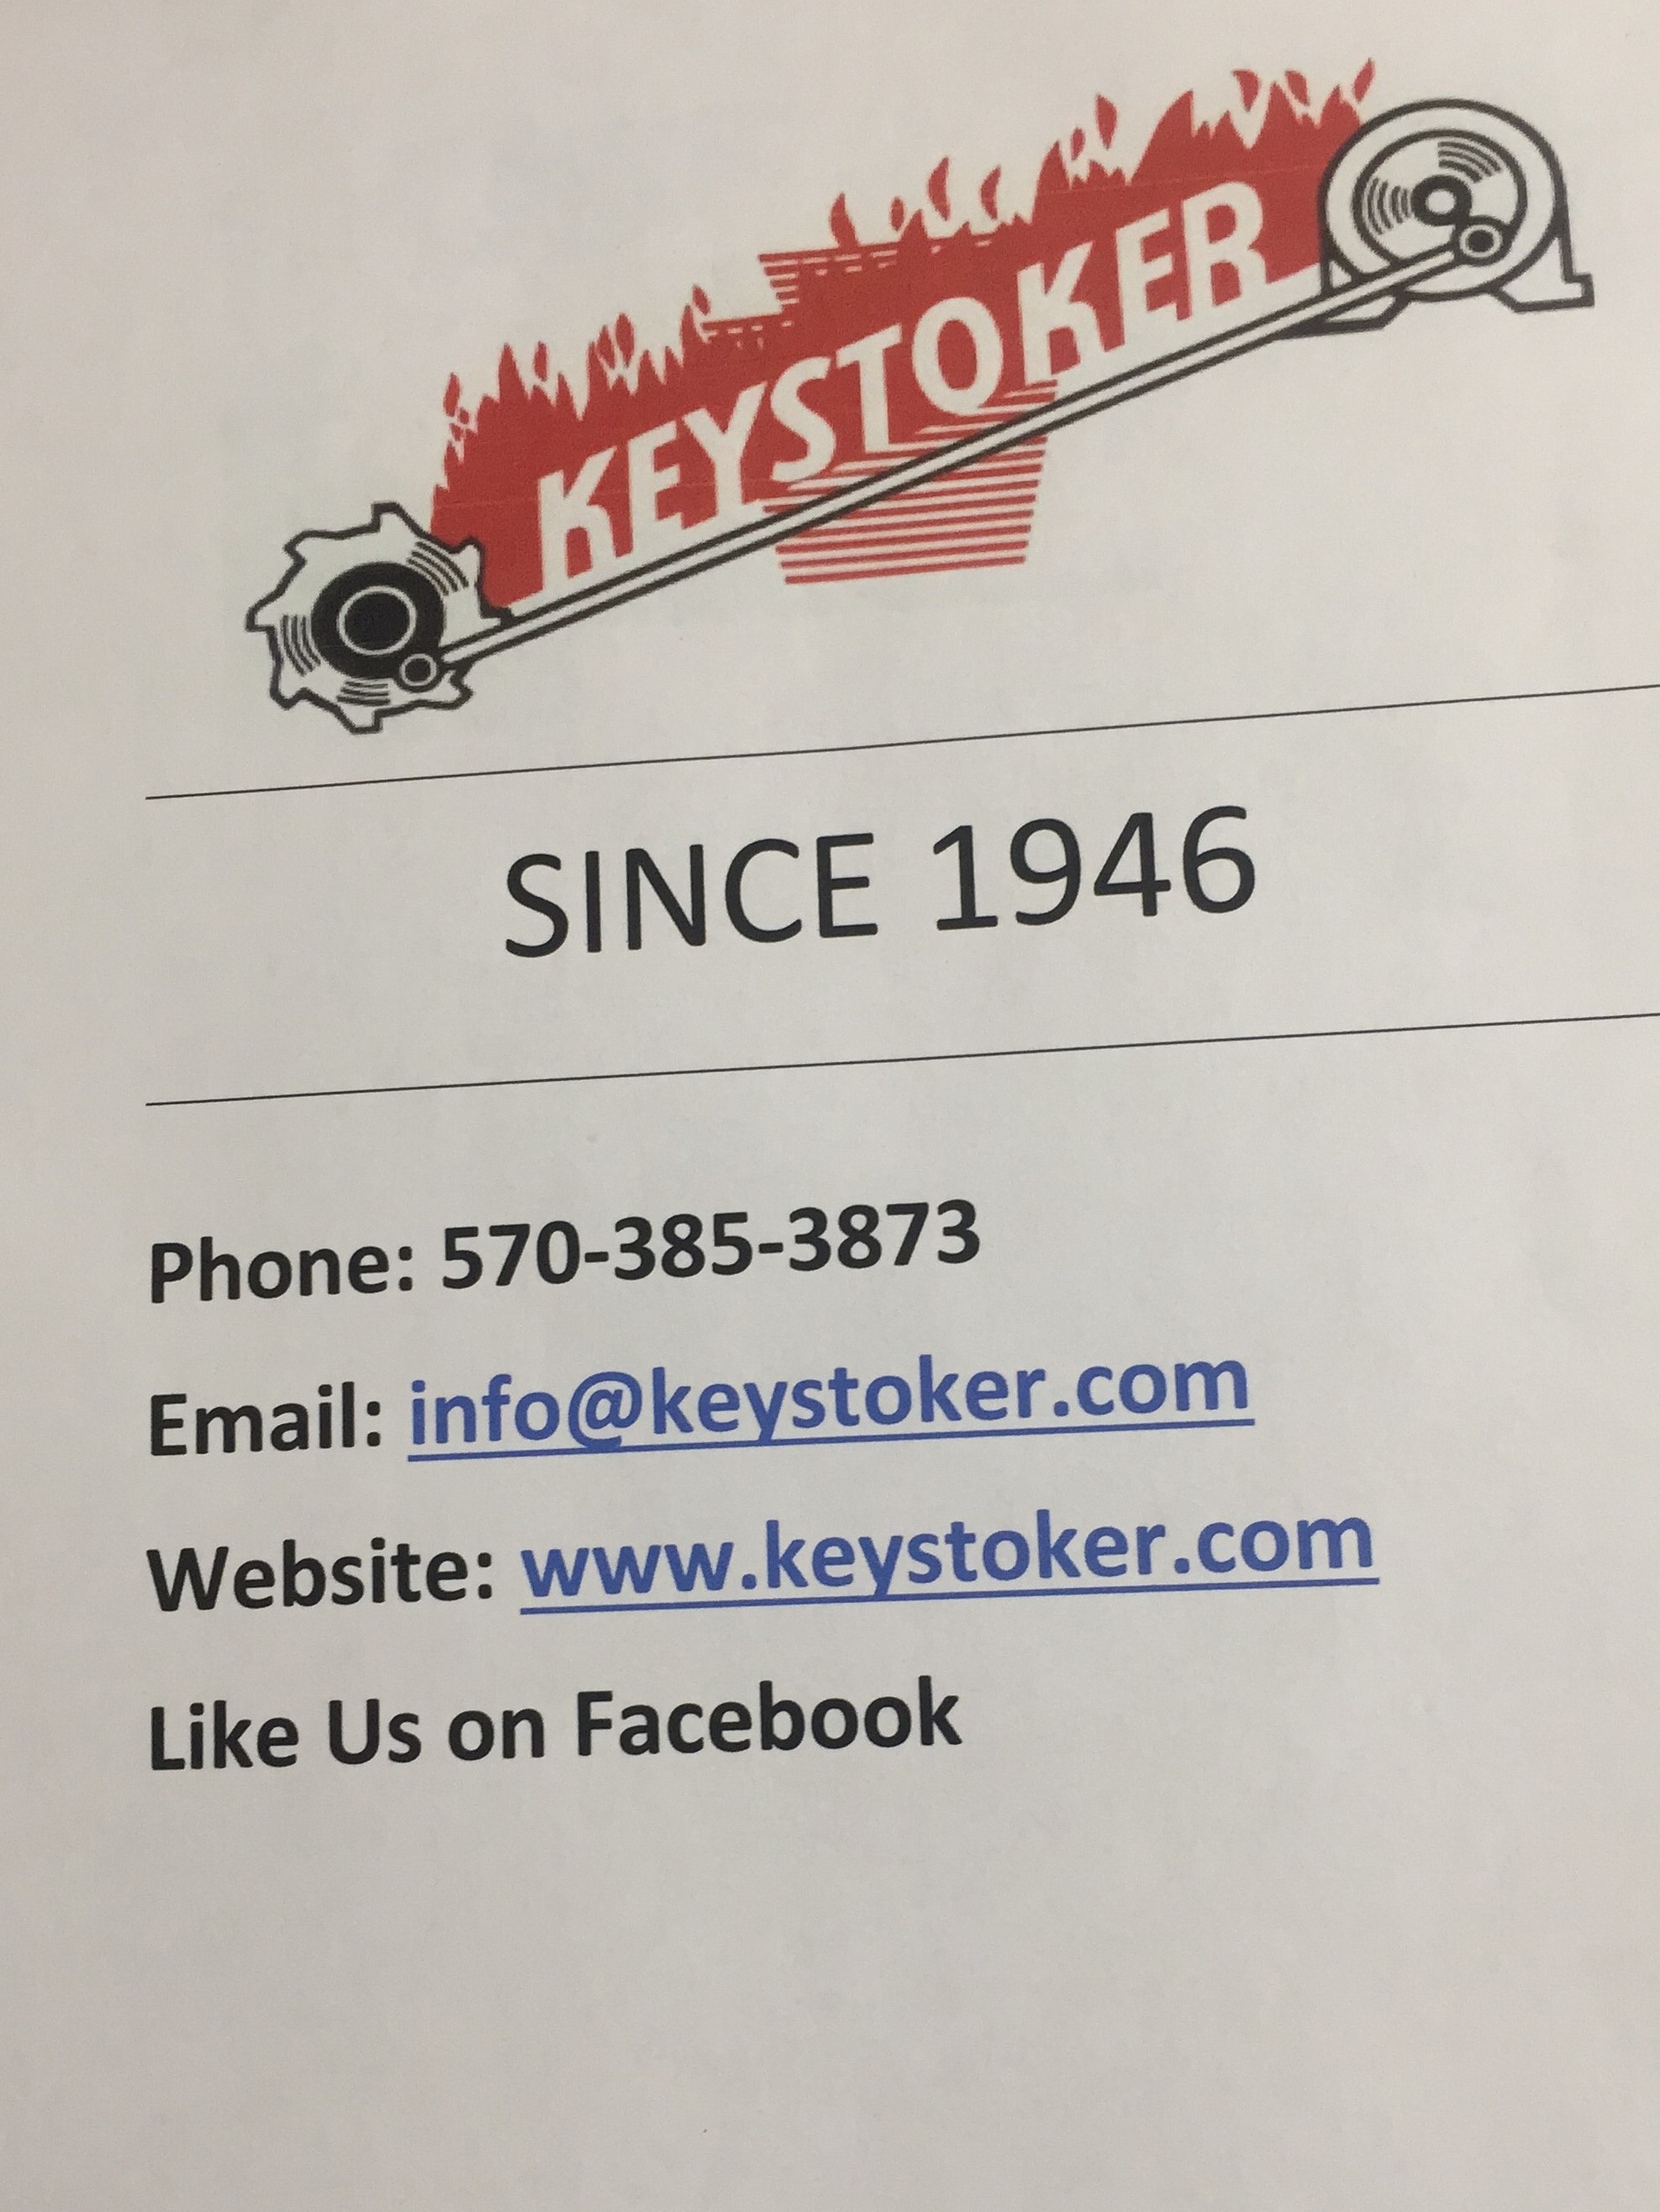 keystoker info.jpg